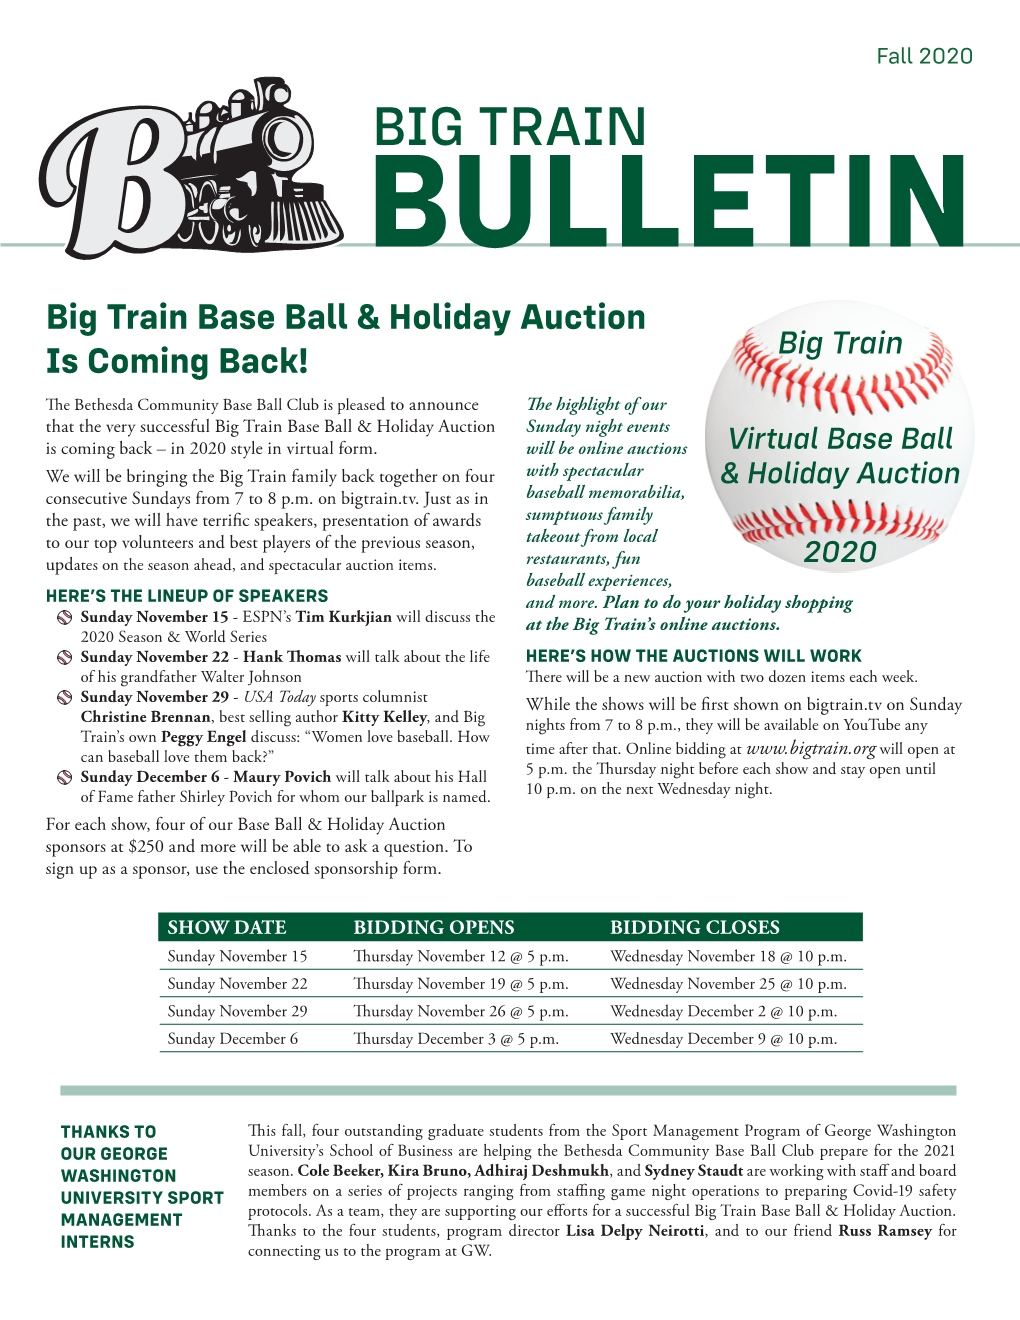 BIG TRAIN BULLETIN Big Train Base Ball & Holiday Auction Big Train Is Coming Back!